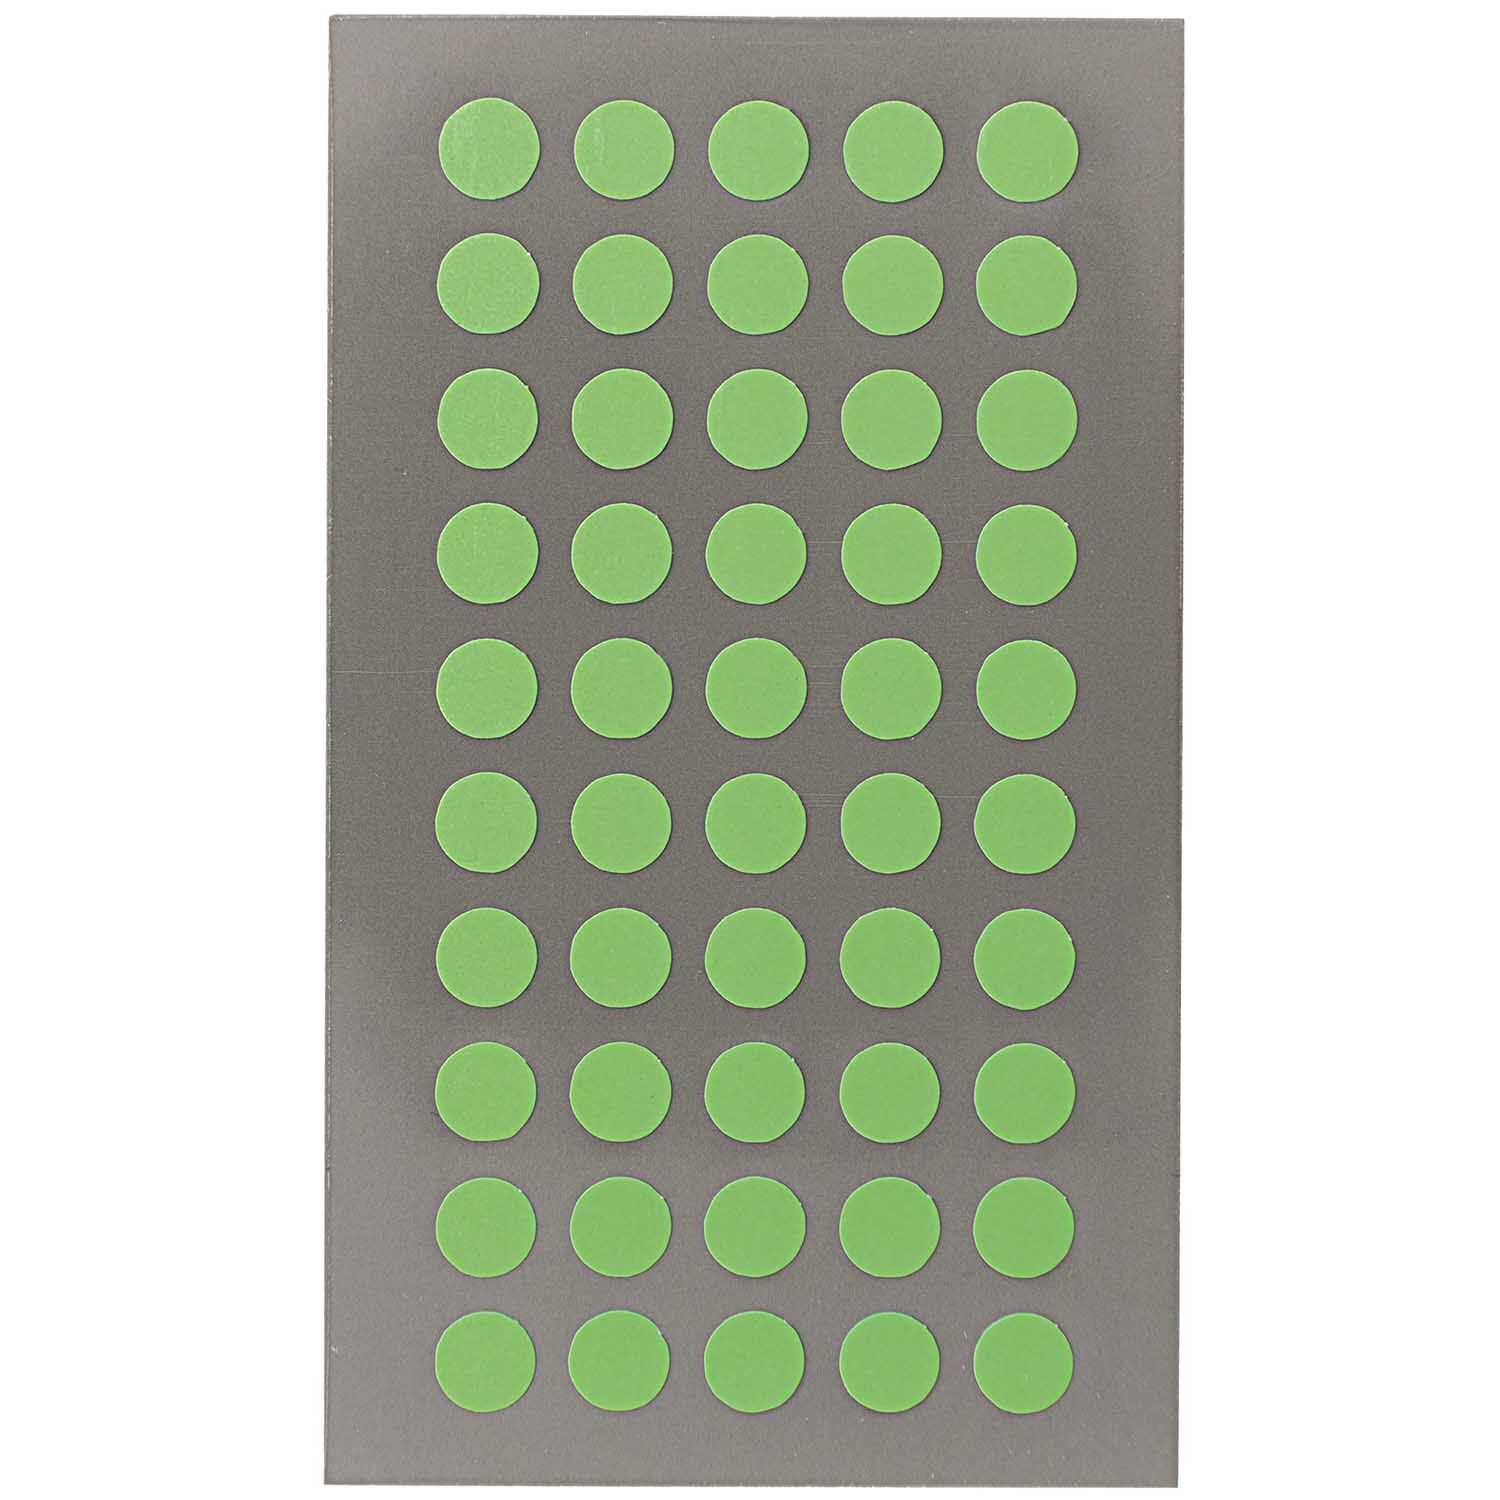 NEU Office Sticker, neon-grüne Punkte, 8 mm, 4 Blatt